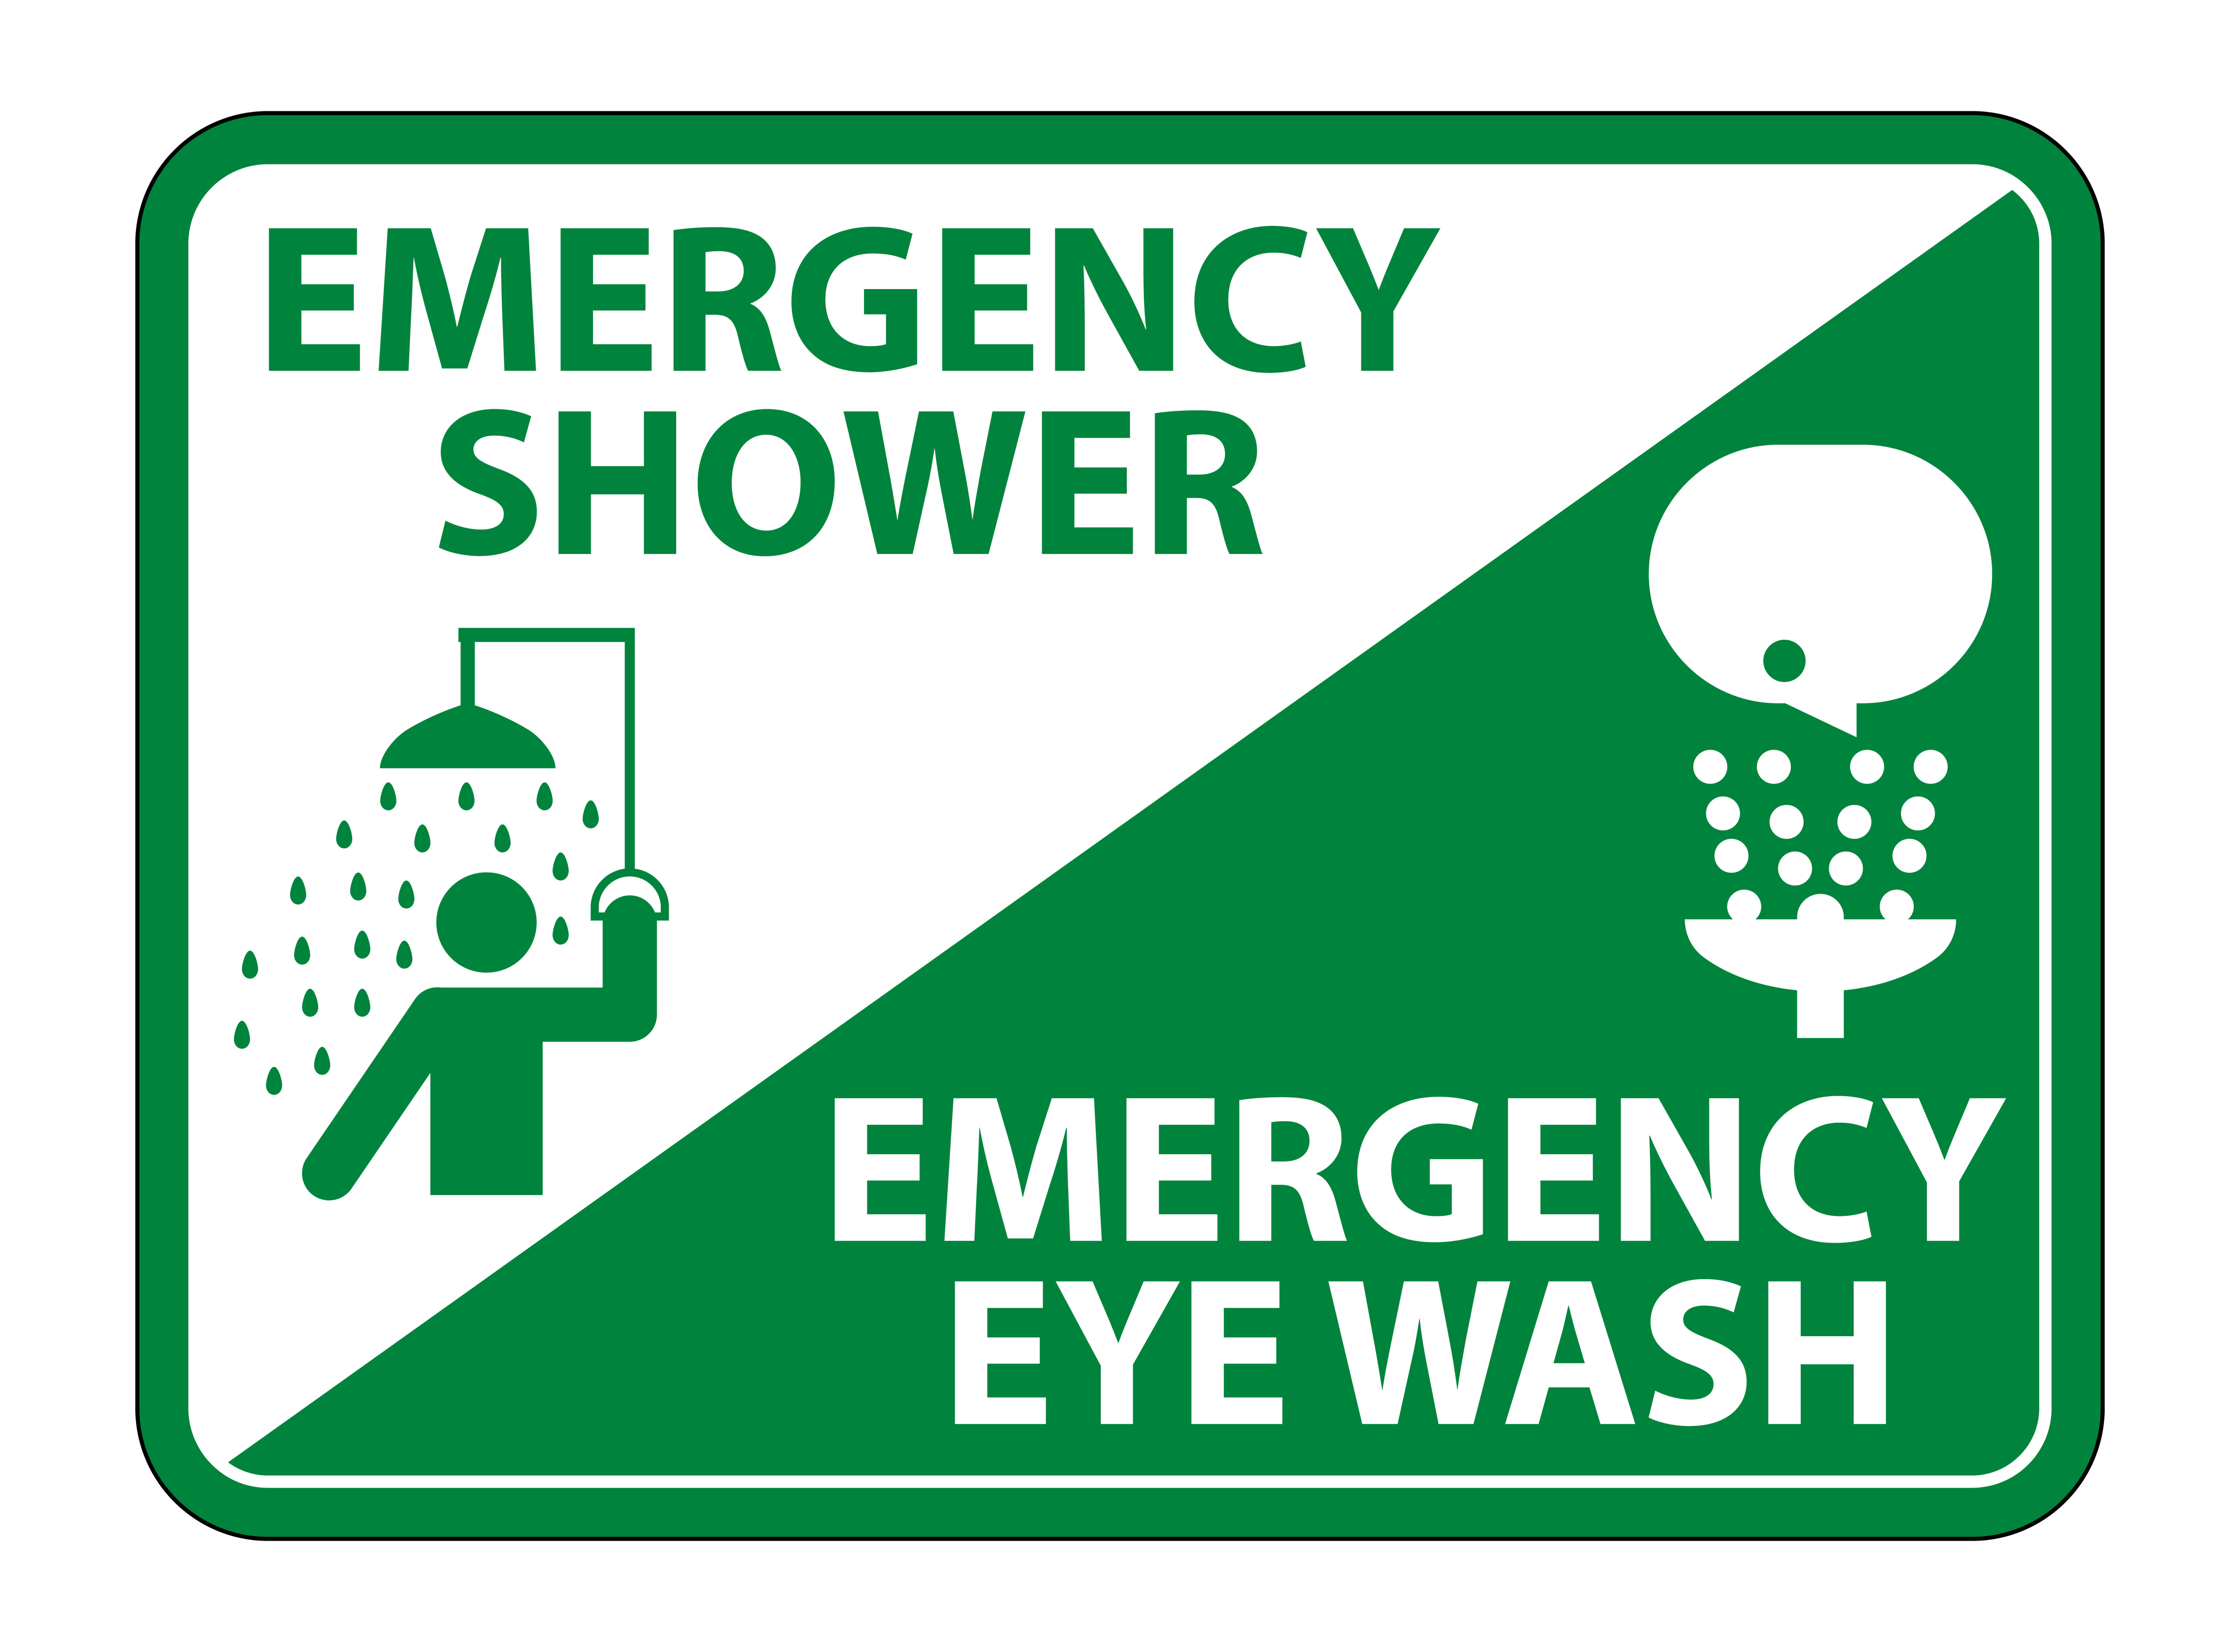 Improve Eyewash Safety Throughout the Workplace